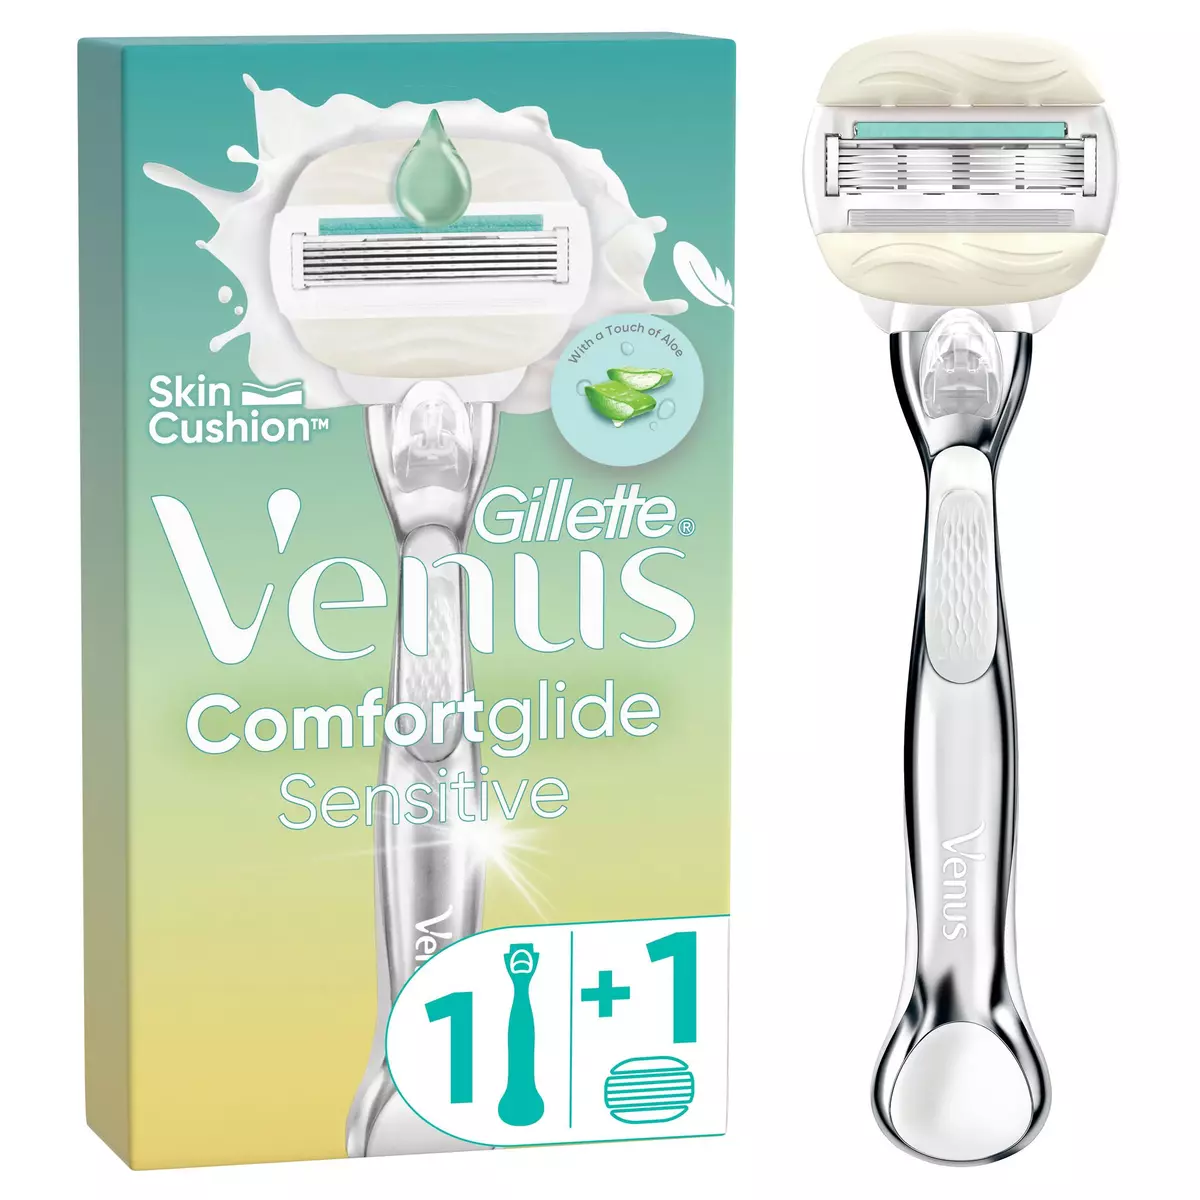 VENUS Comfort glide rasoir sensitive 1 rasoir + 1 recharge